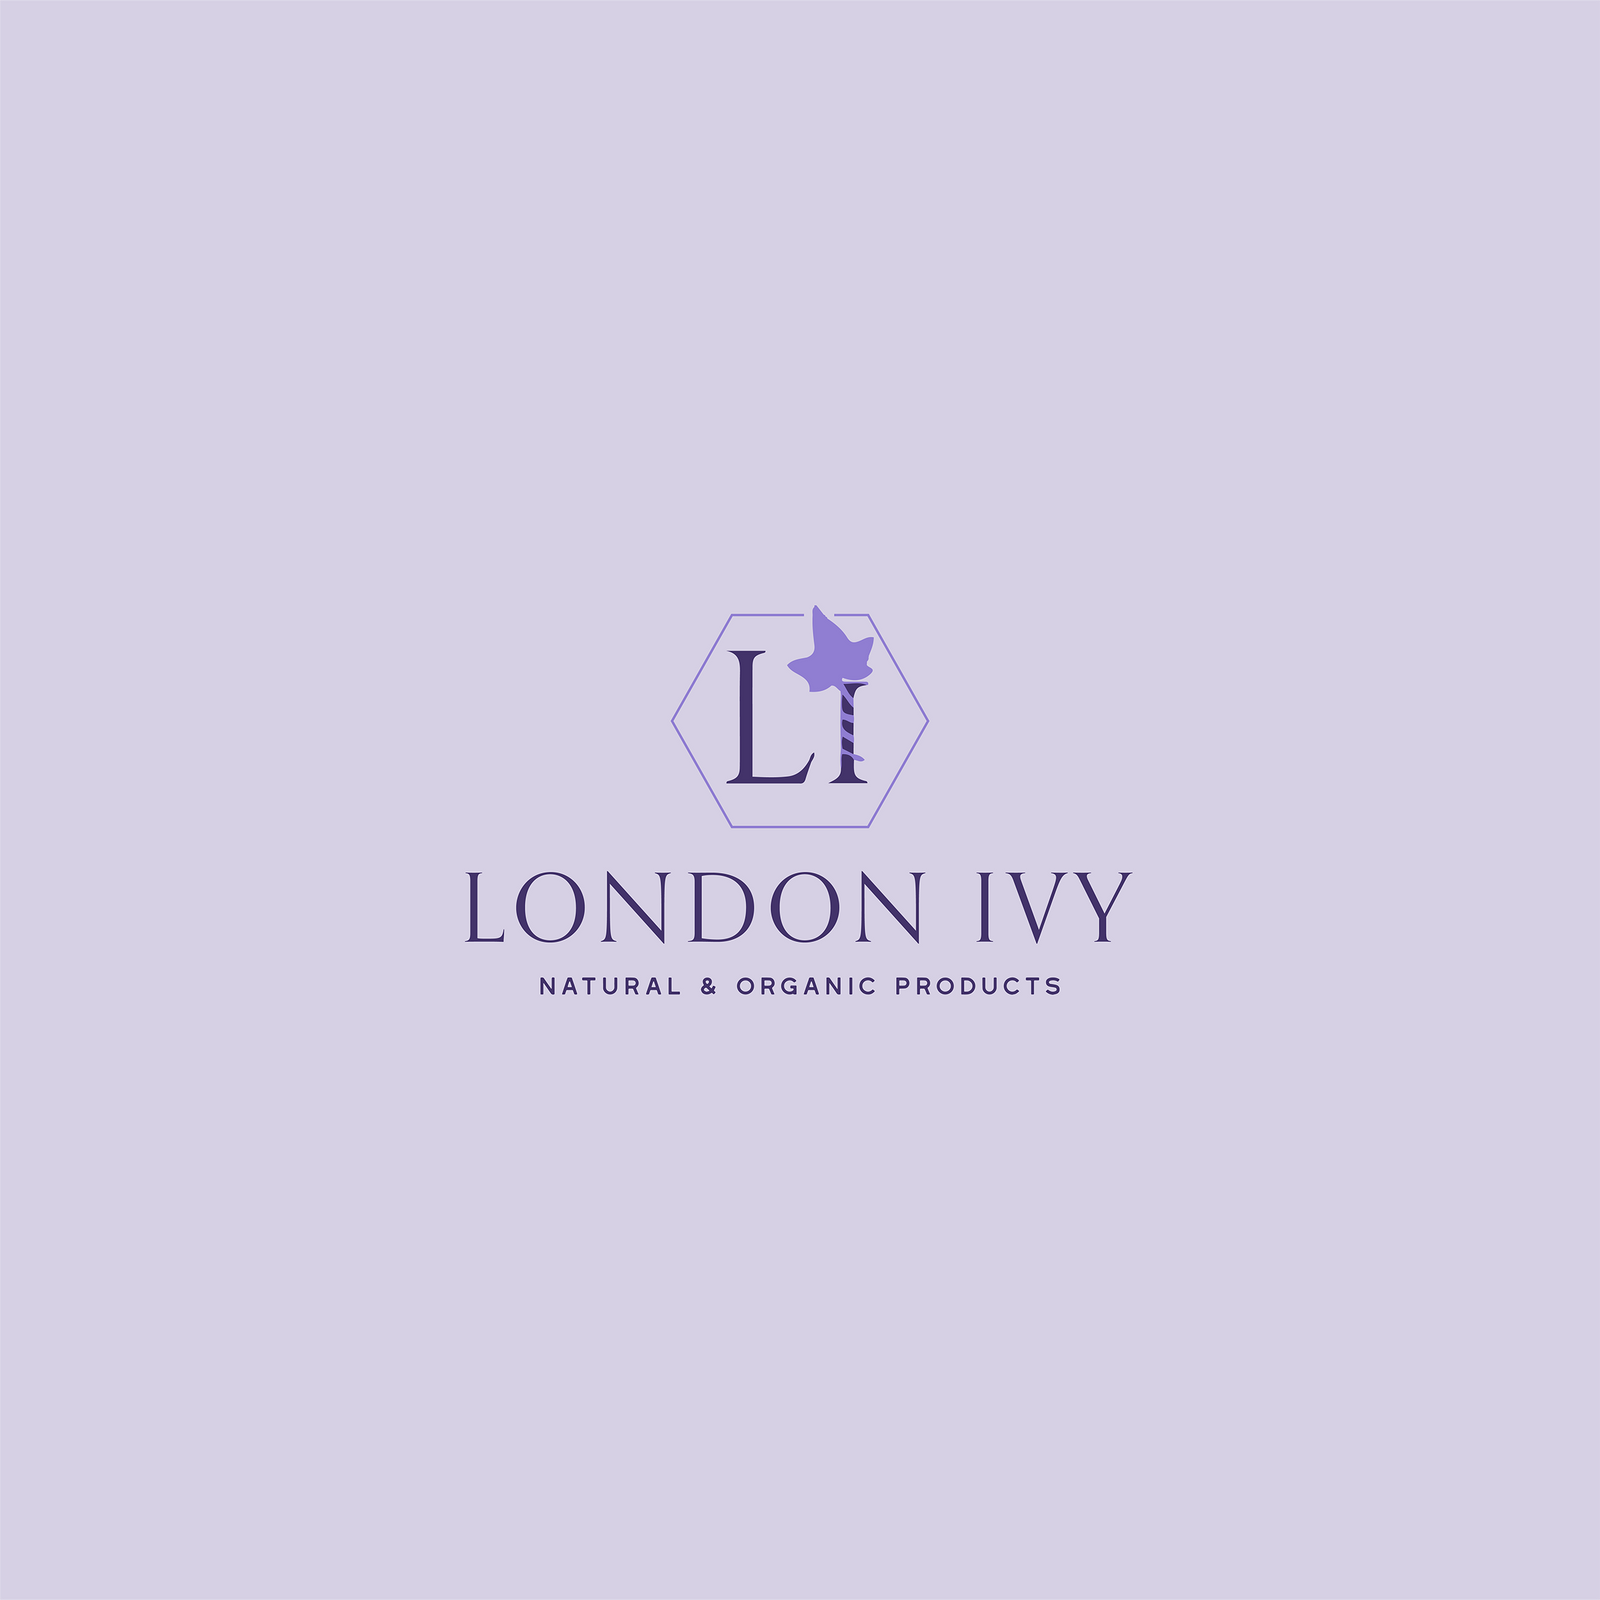 London Ivy